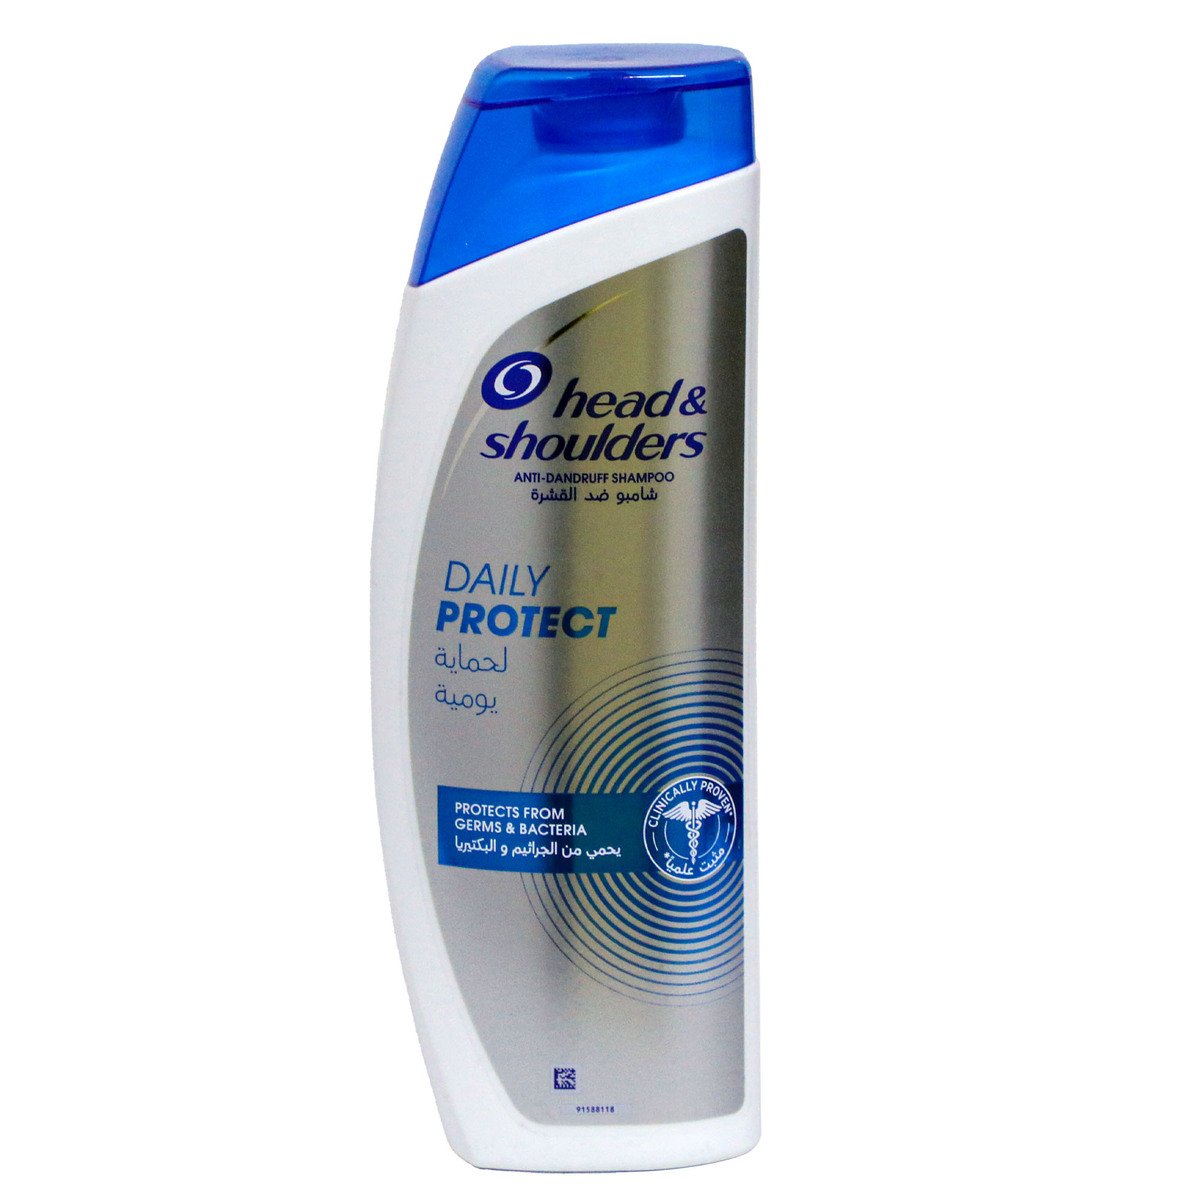 Head & Shoulders Anti-Dandruff Shampoo Daily Protect 400 ml